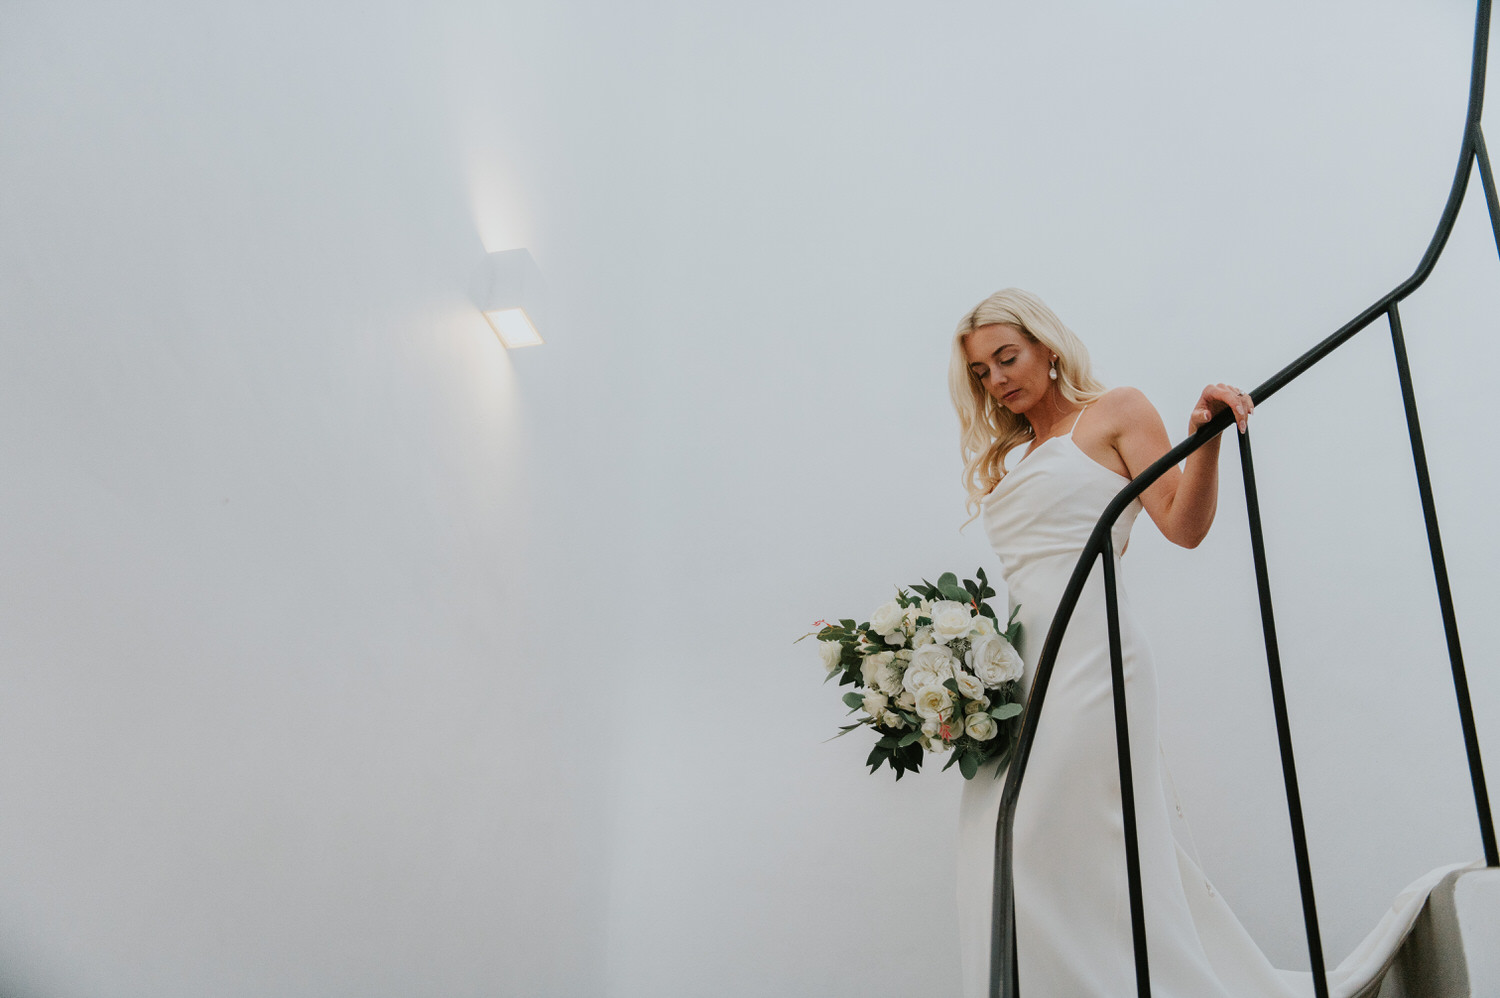 Mykonos wedding photographer: gorgeous bride walking down the spiral stairs in villa holding her bouquet.